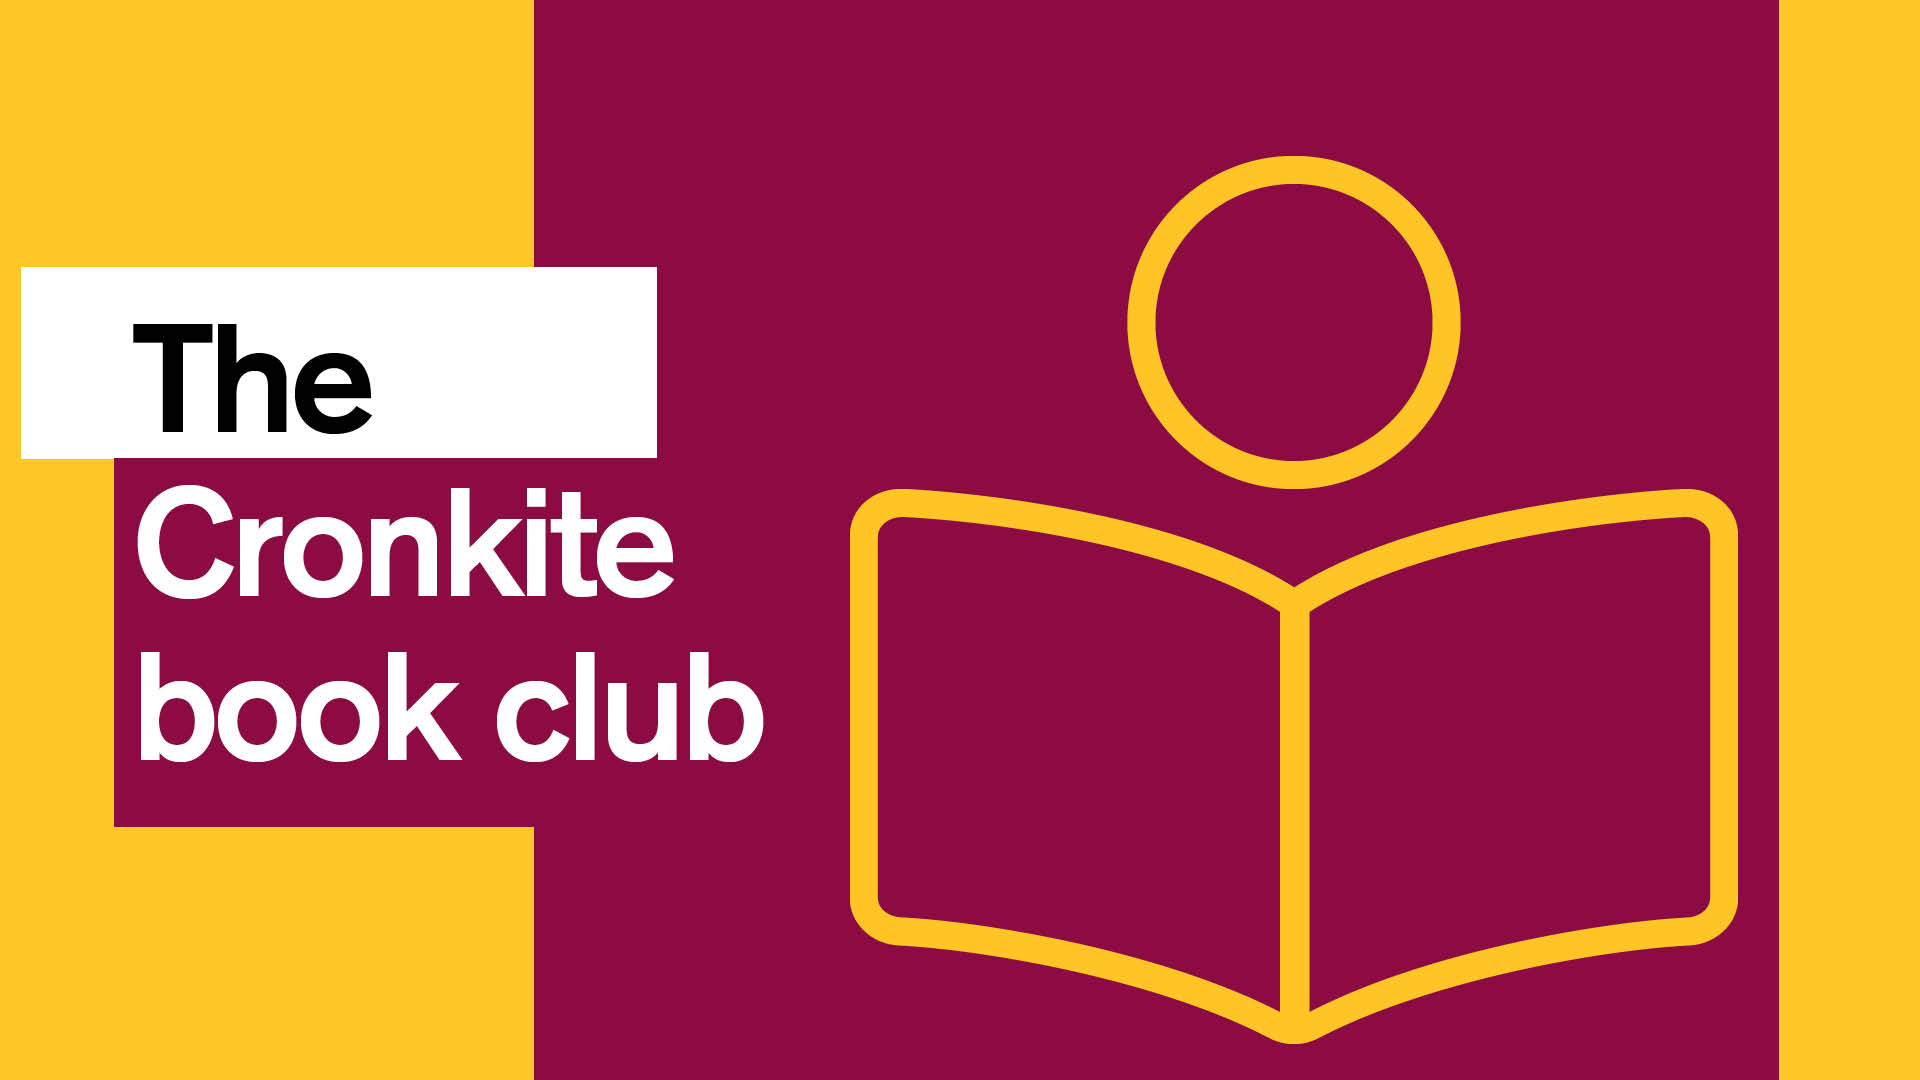 Cronkite book club